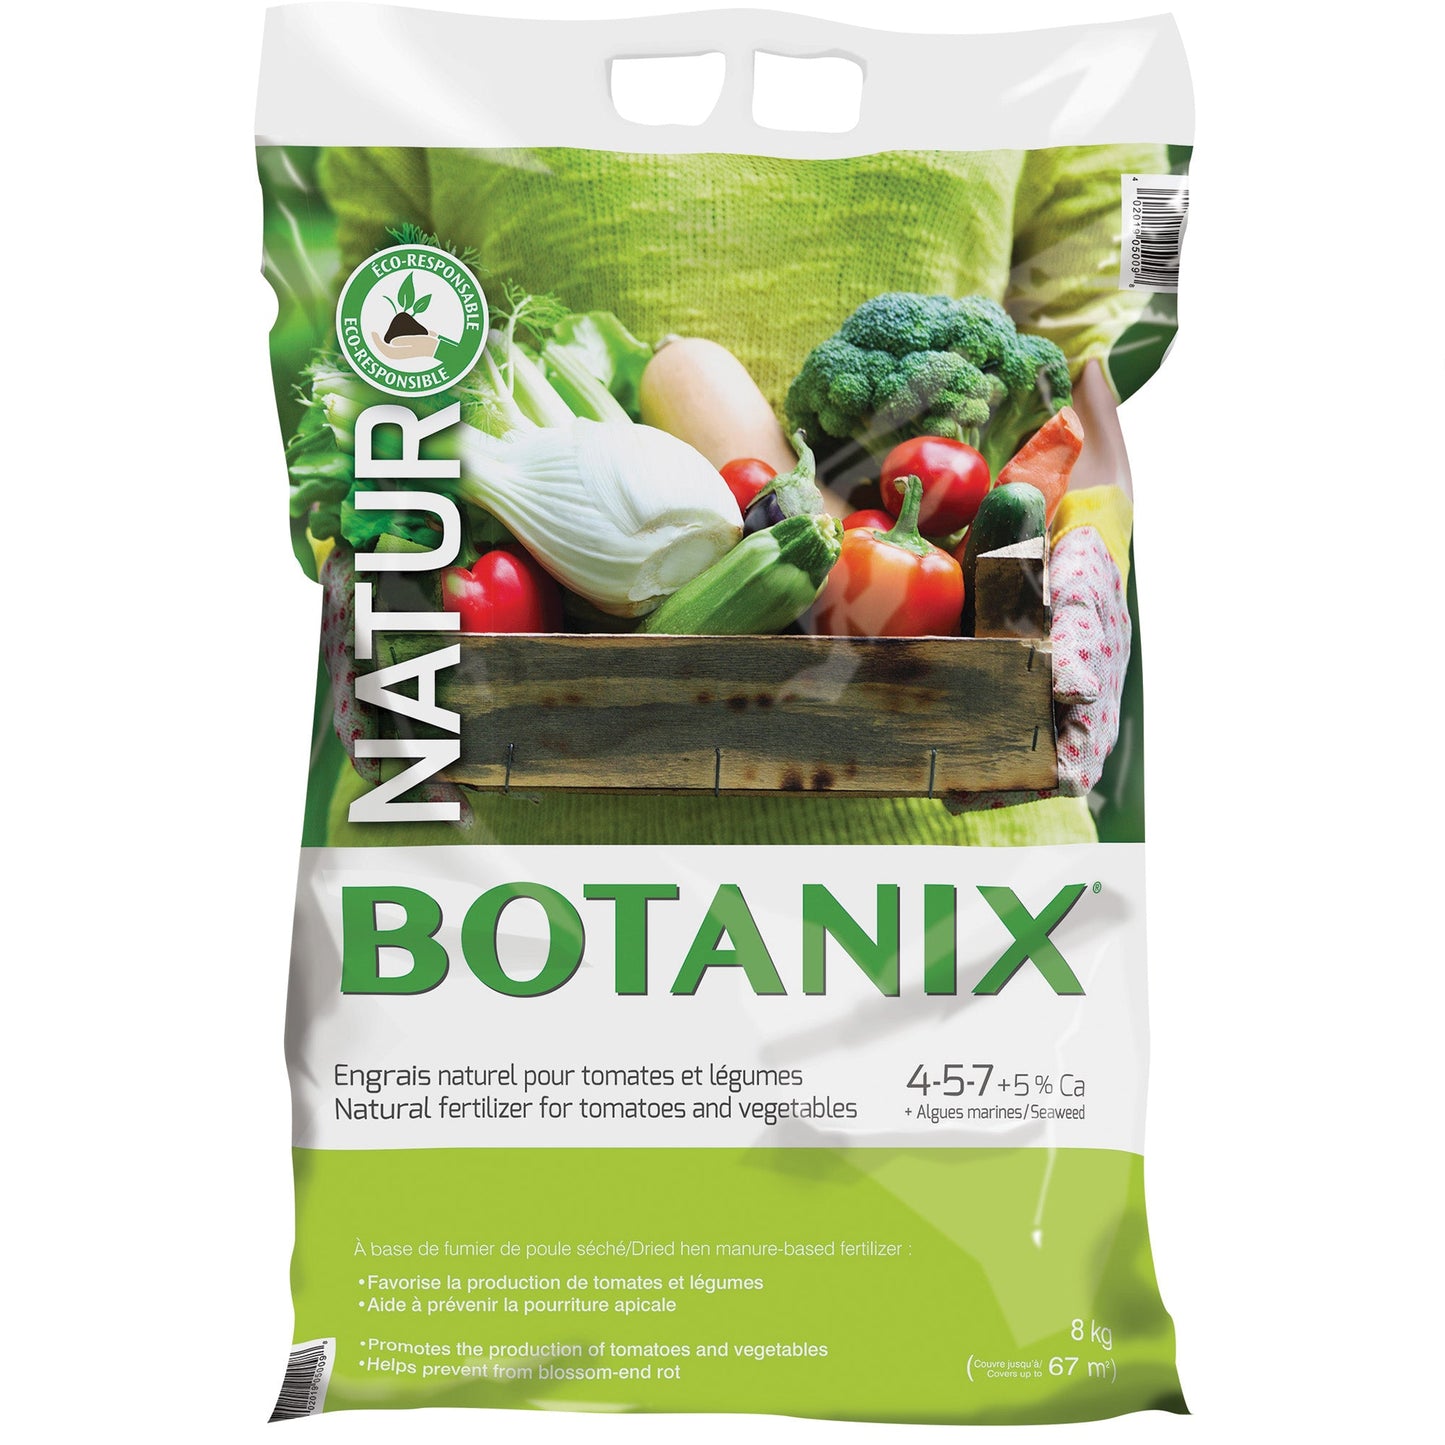 Natural fertilizer for tomatoes and vegetables 4-5-7+5% calcium - Botanix NATUR